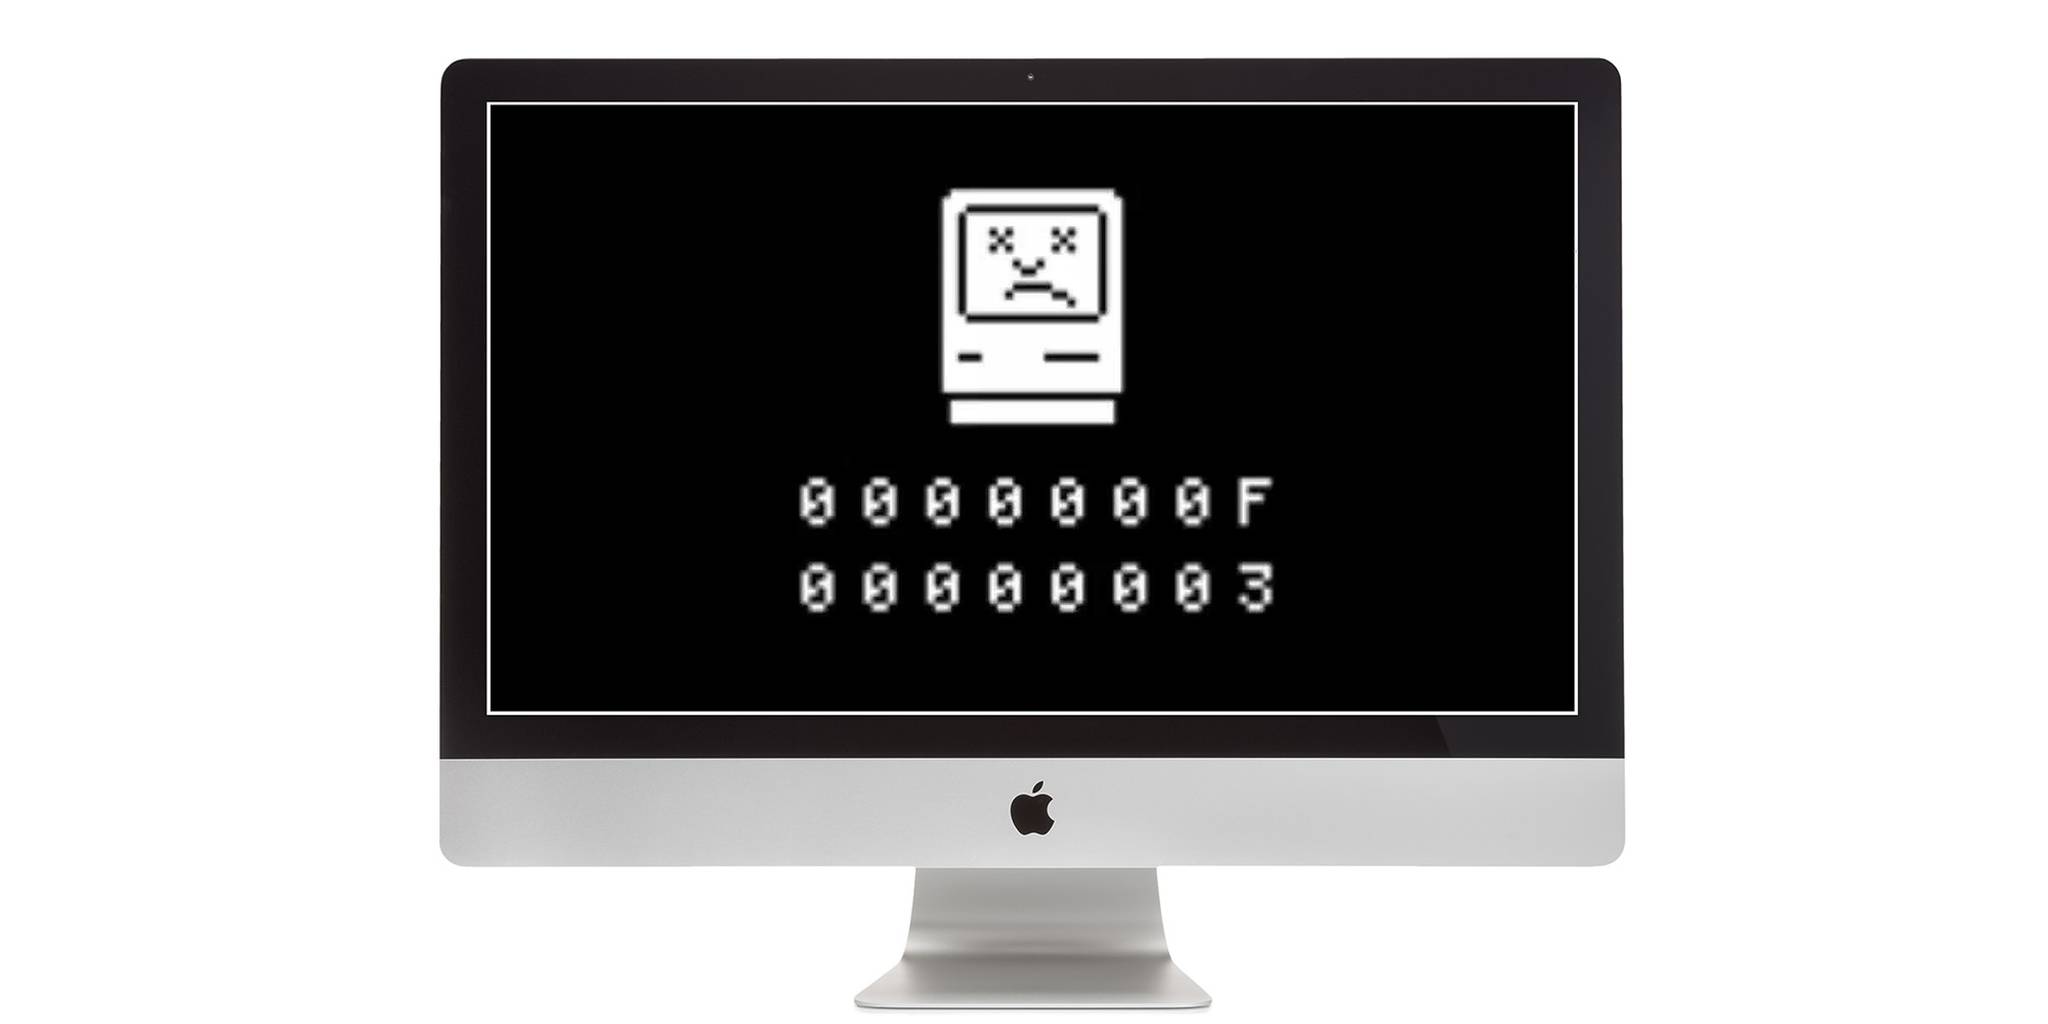 apple website monitor turns off